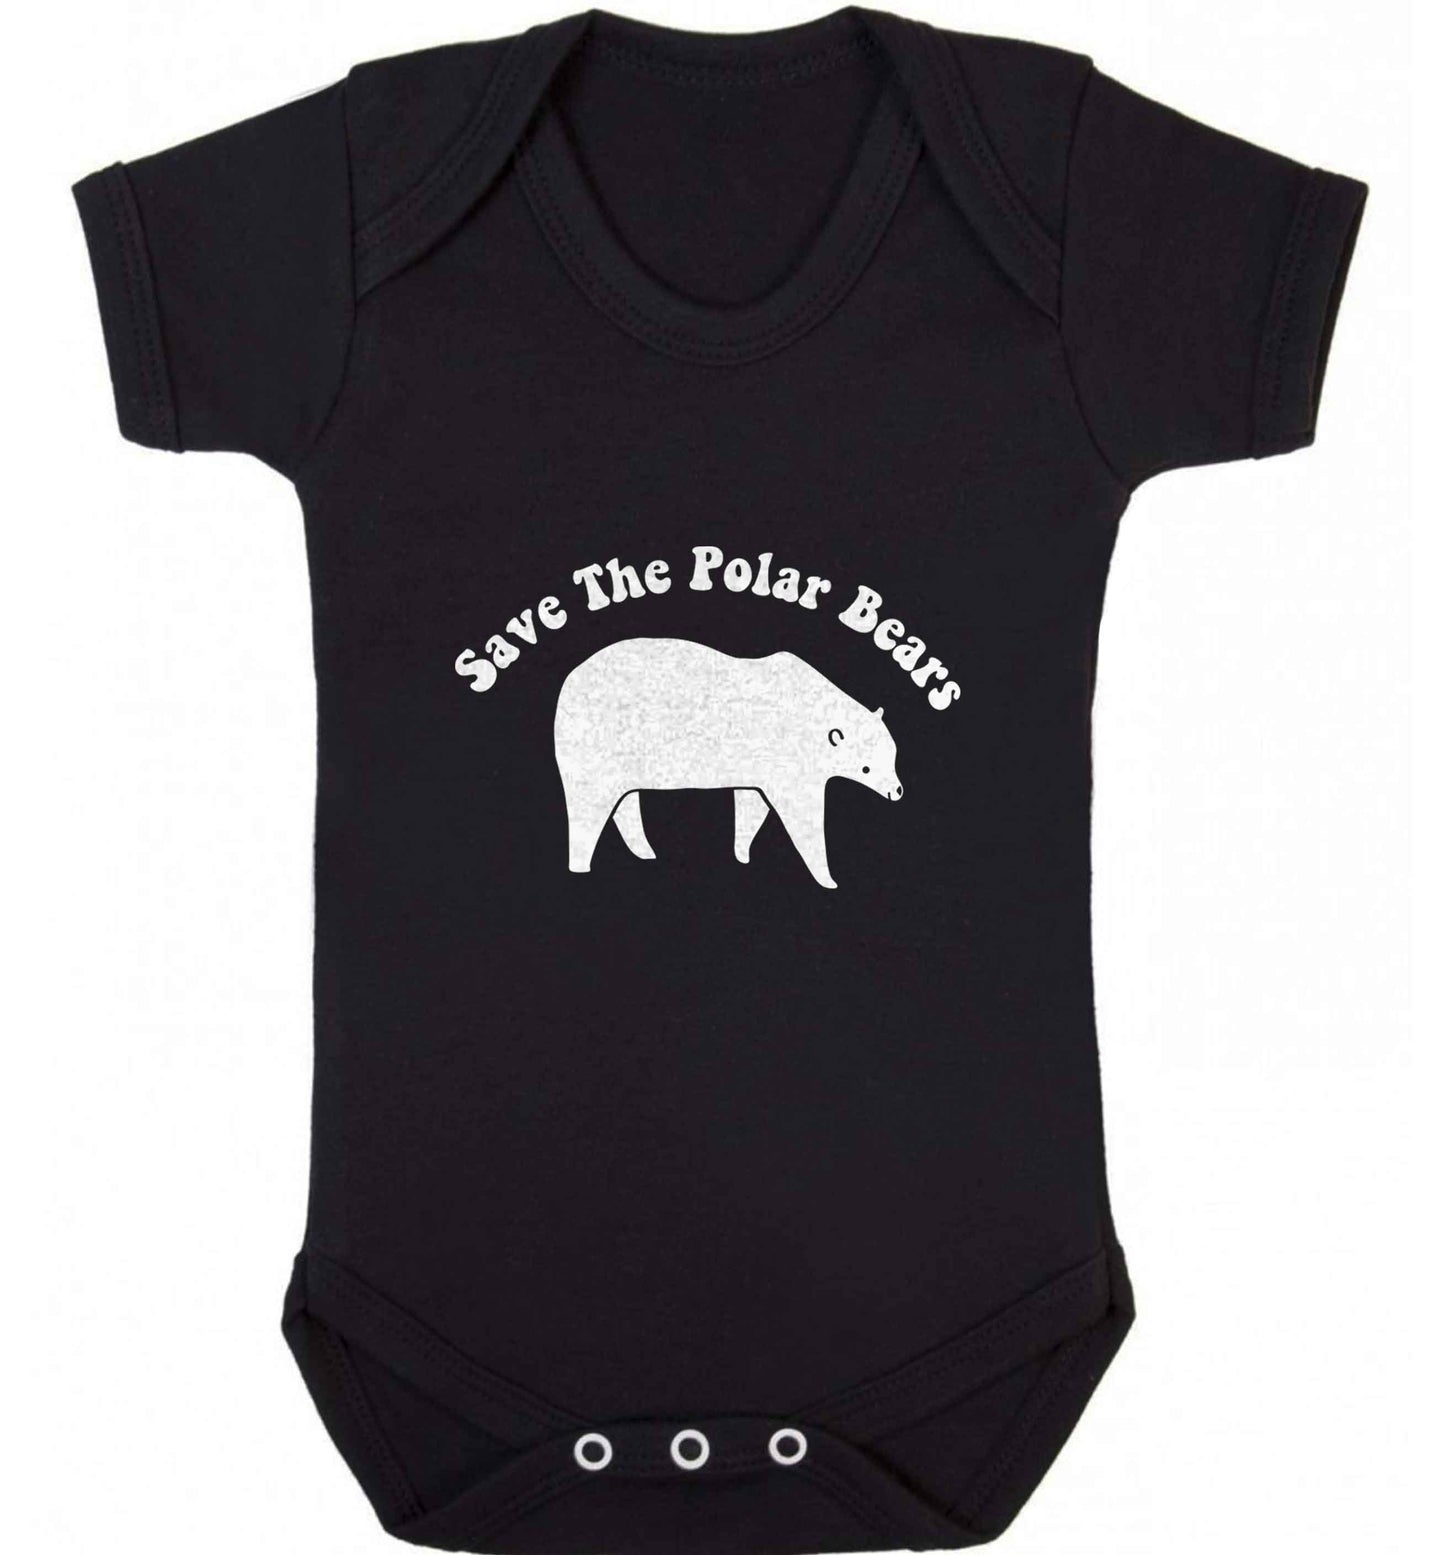 Save The Polar Bears baby vest black 18-24 months